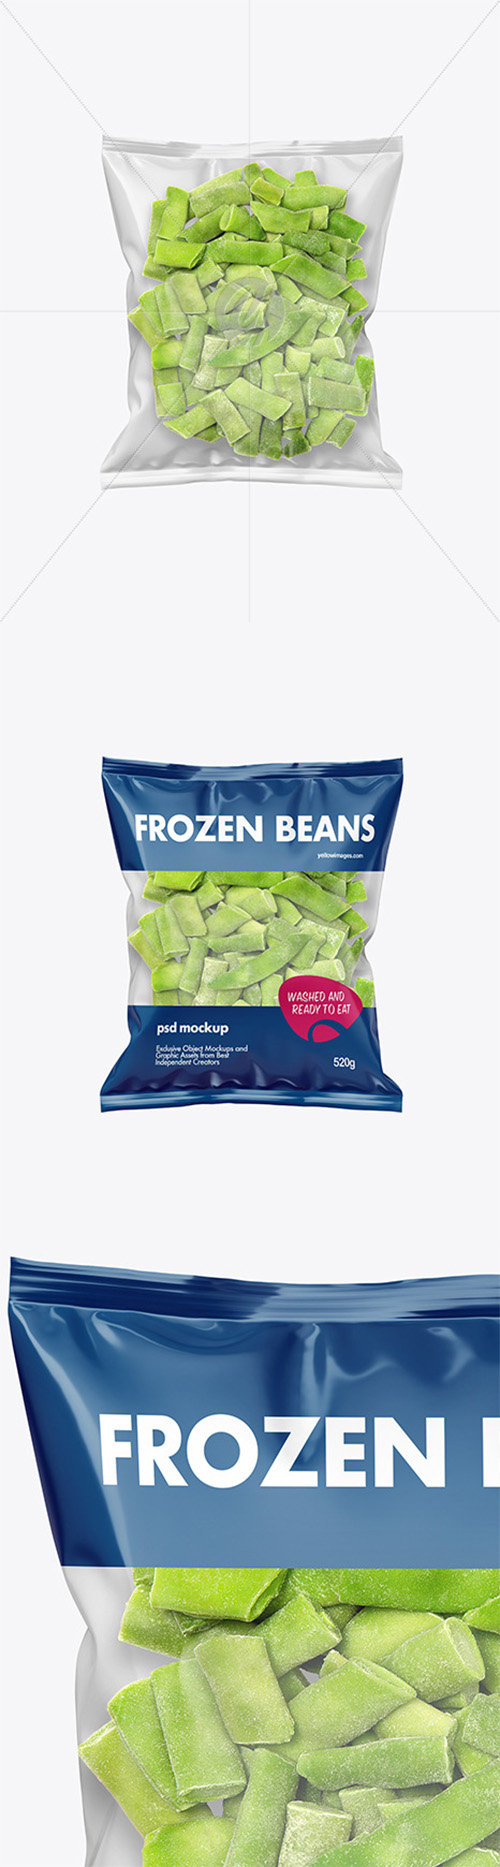 Plastic Bag With Frozen Beans Mockup 52437 TIF